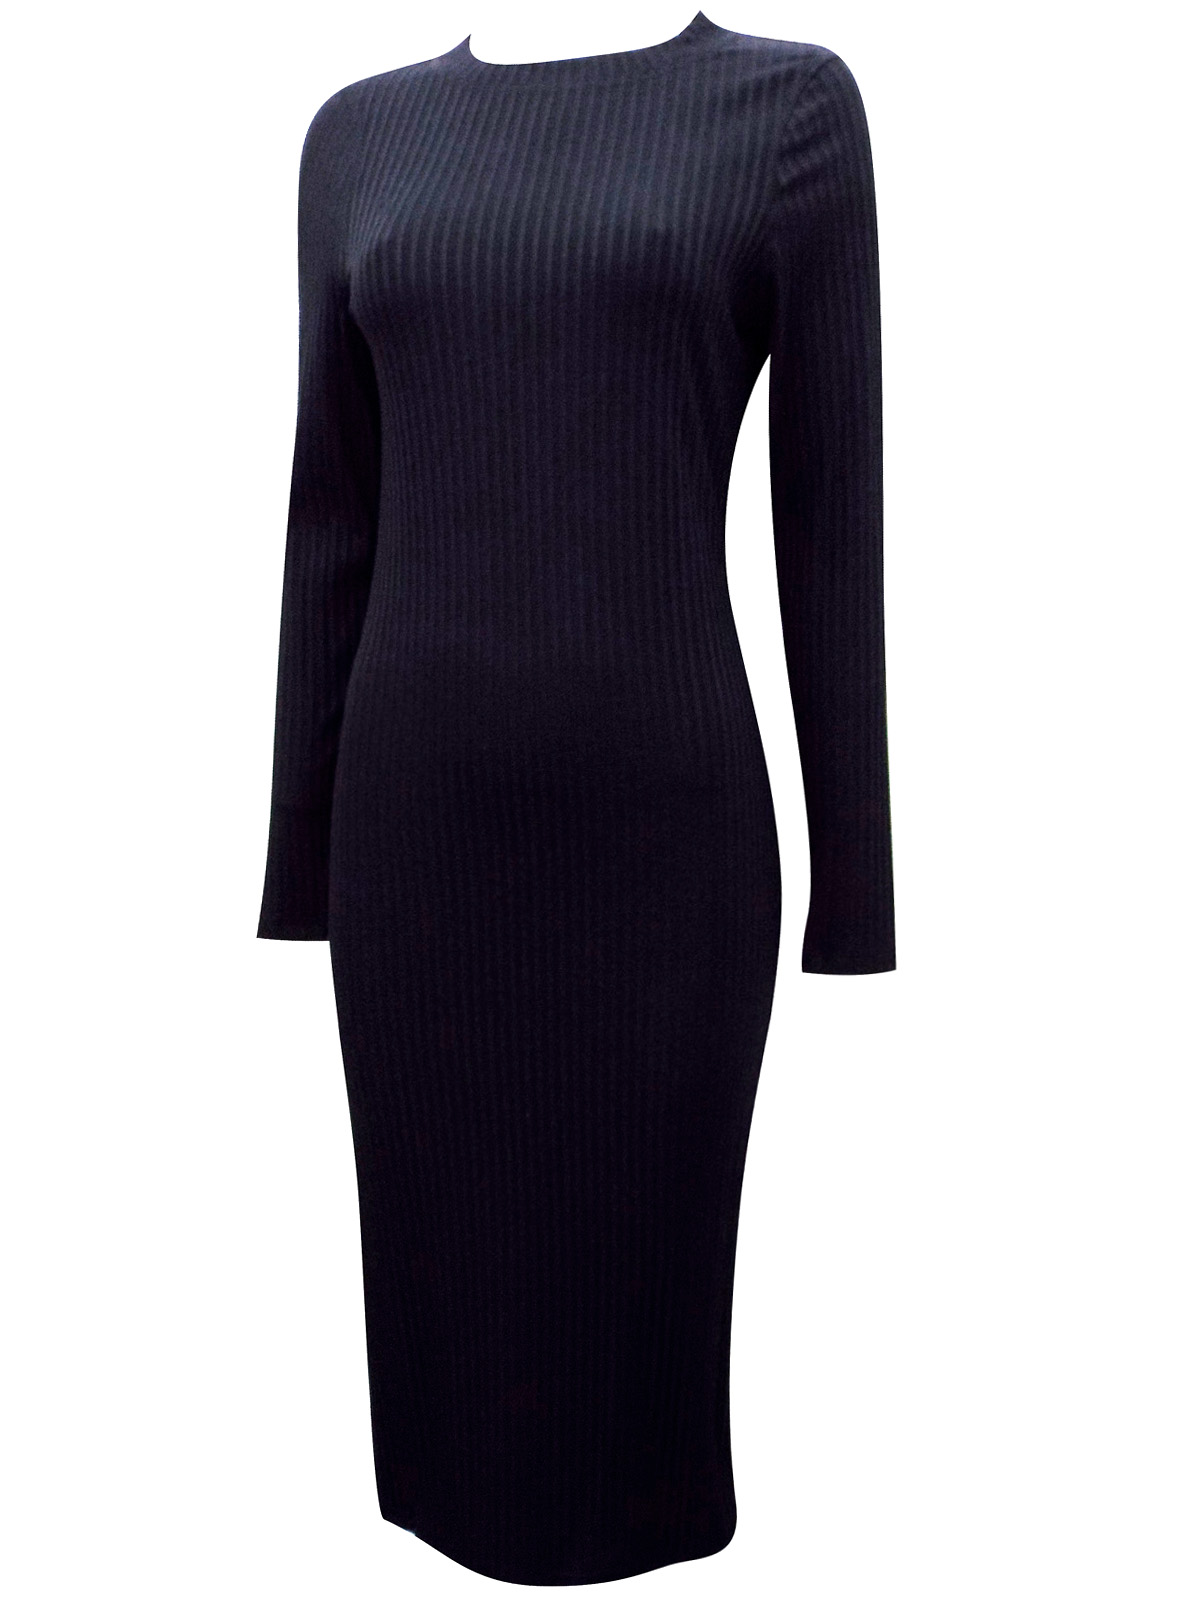 Marks and Spencer - - M&5 BLACK Ribbed Long Sleeve Midi Dress - Size 8 ...